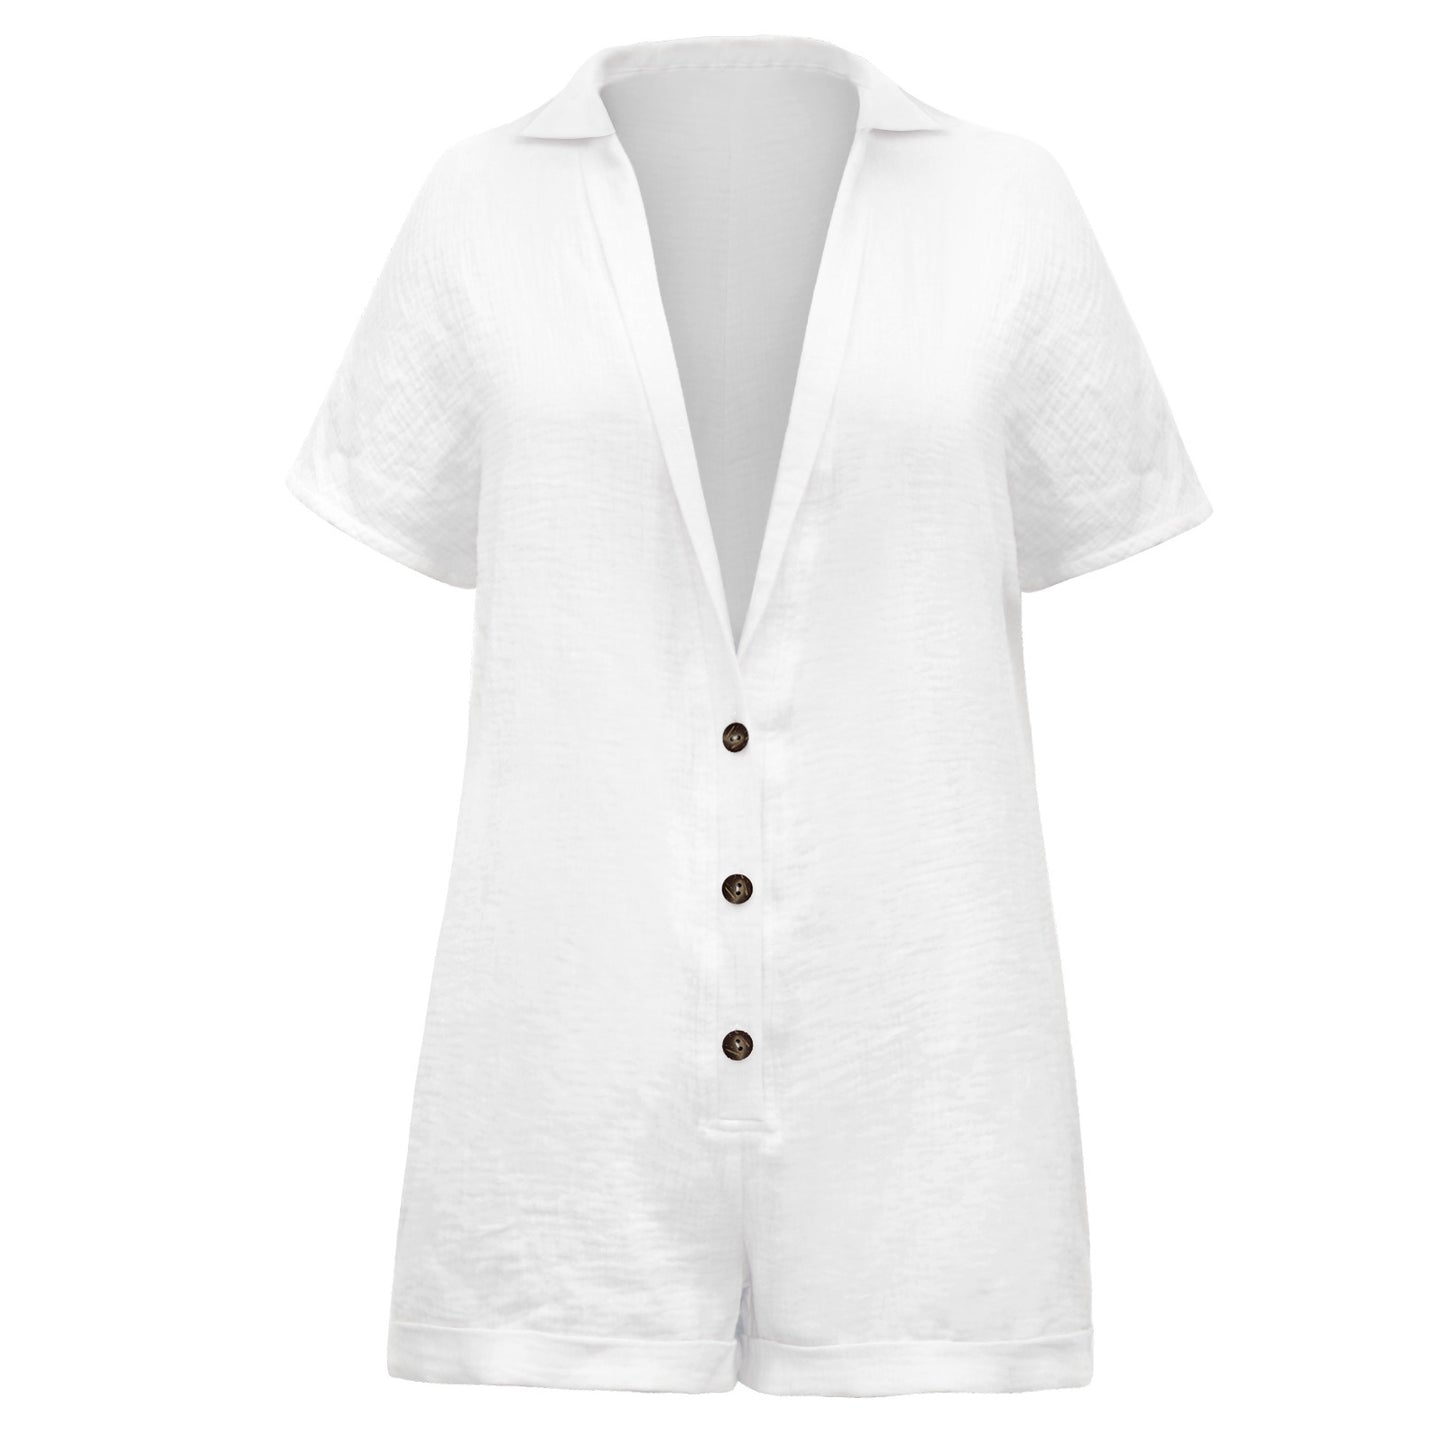 Cotton Linen Breathable Comfortable Loose Button Deep V-neckRomper